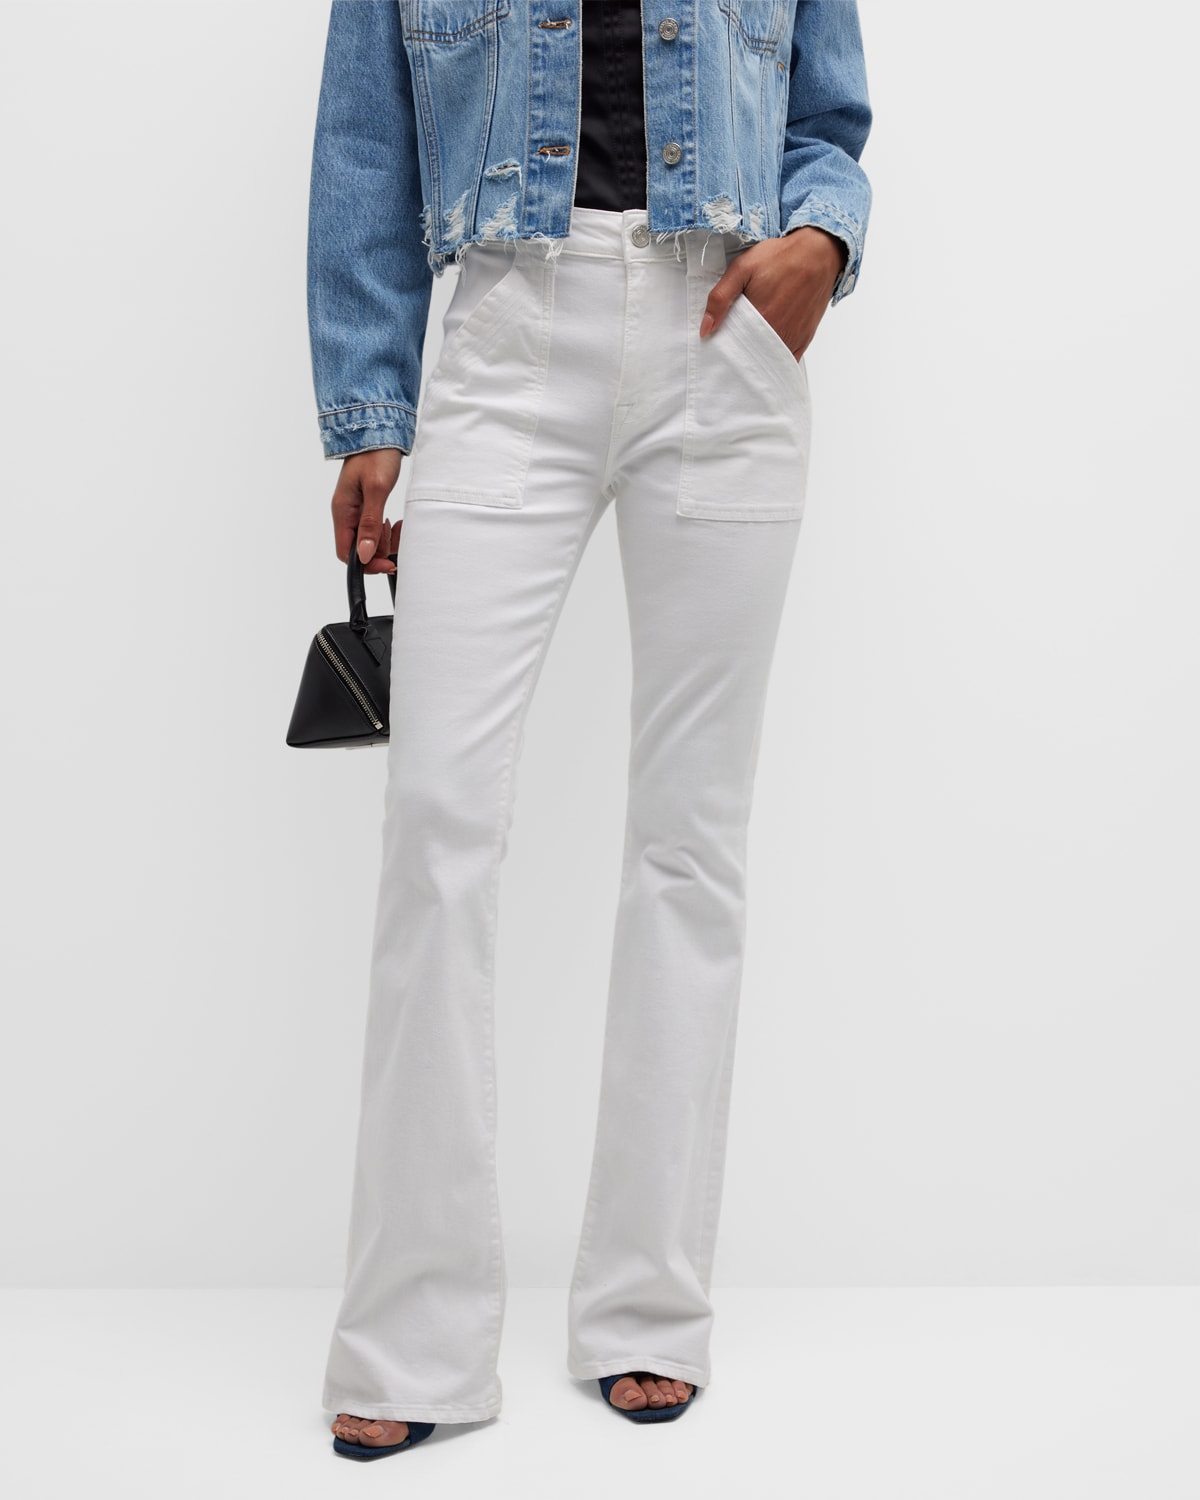 FRAME Le High Flare Jeans | Neiman Marcus